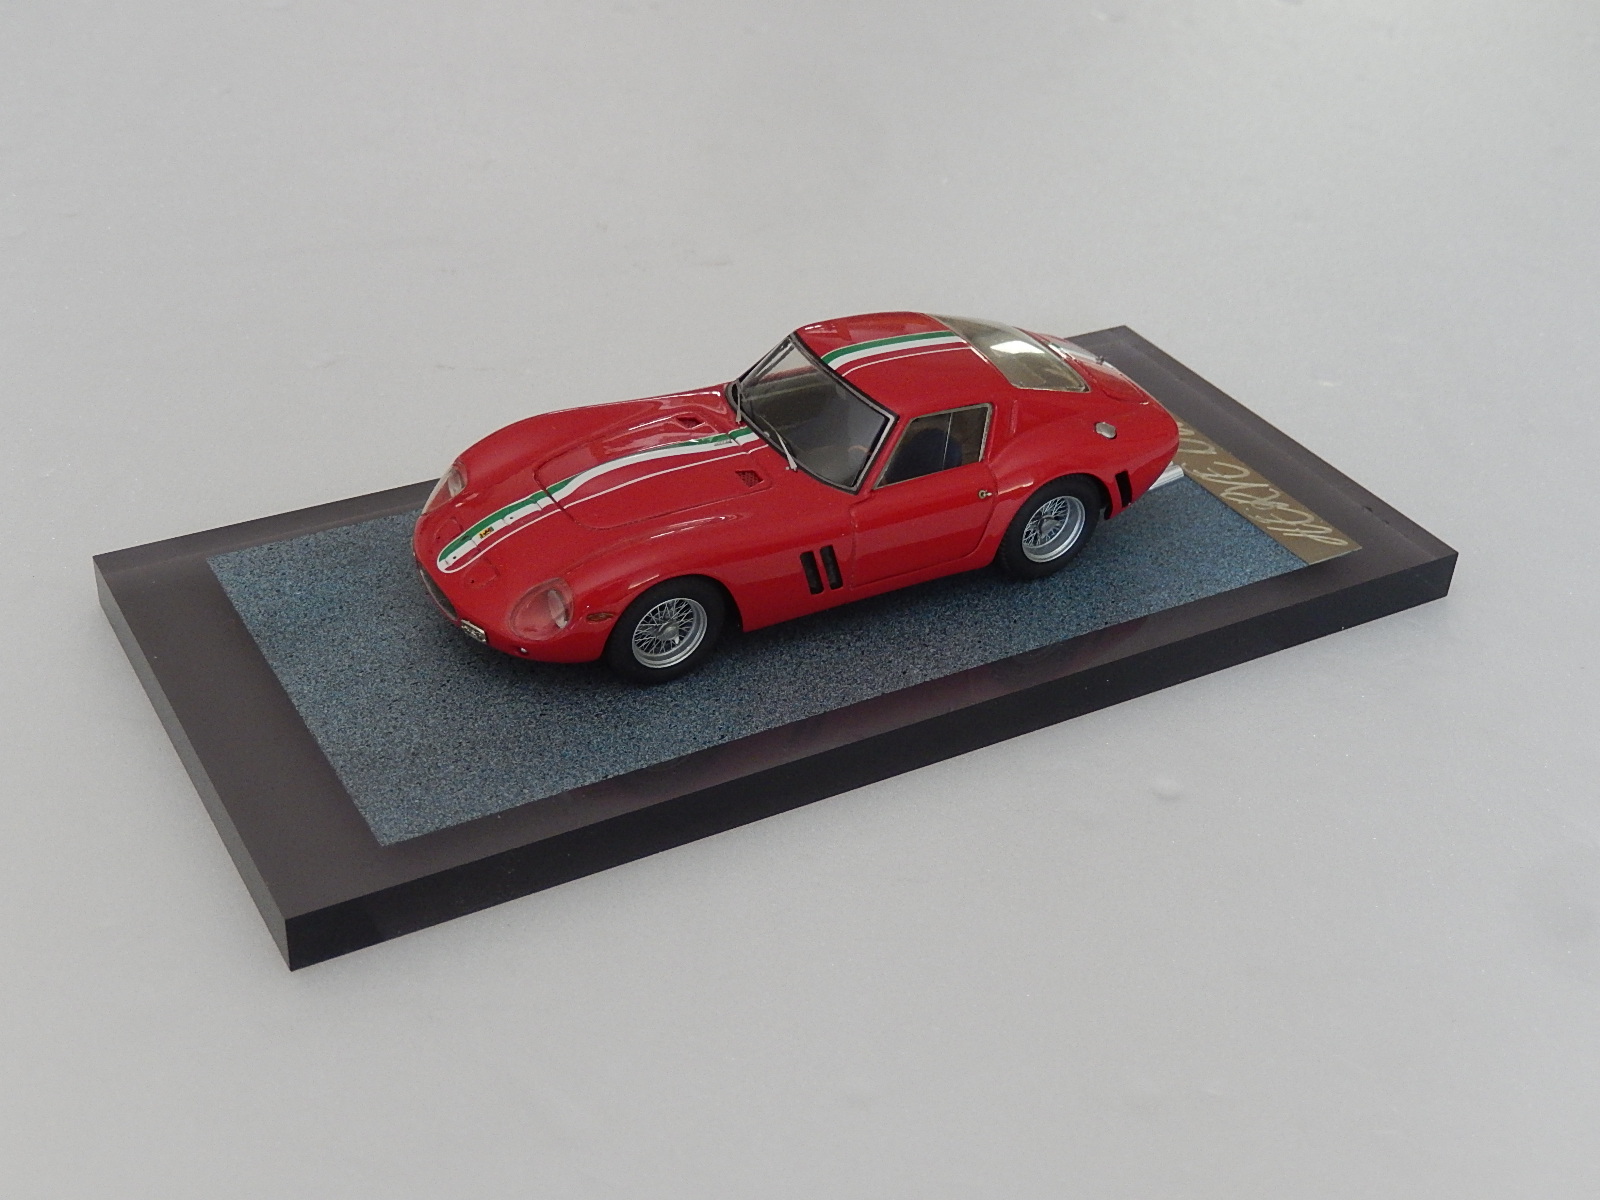 H. Duband : Ferrari 250 GTO  presentation 3223 GT